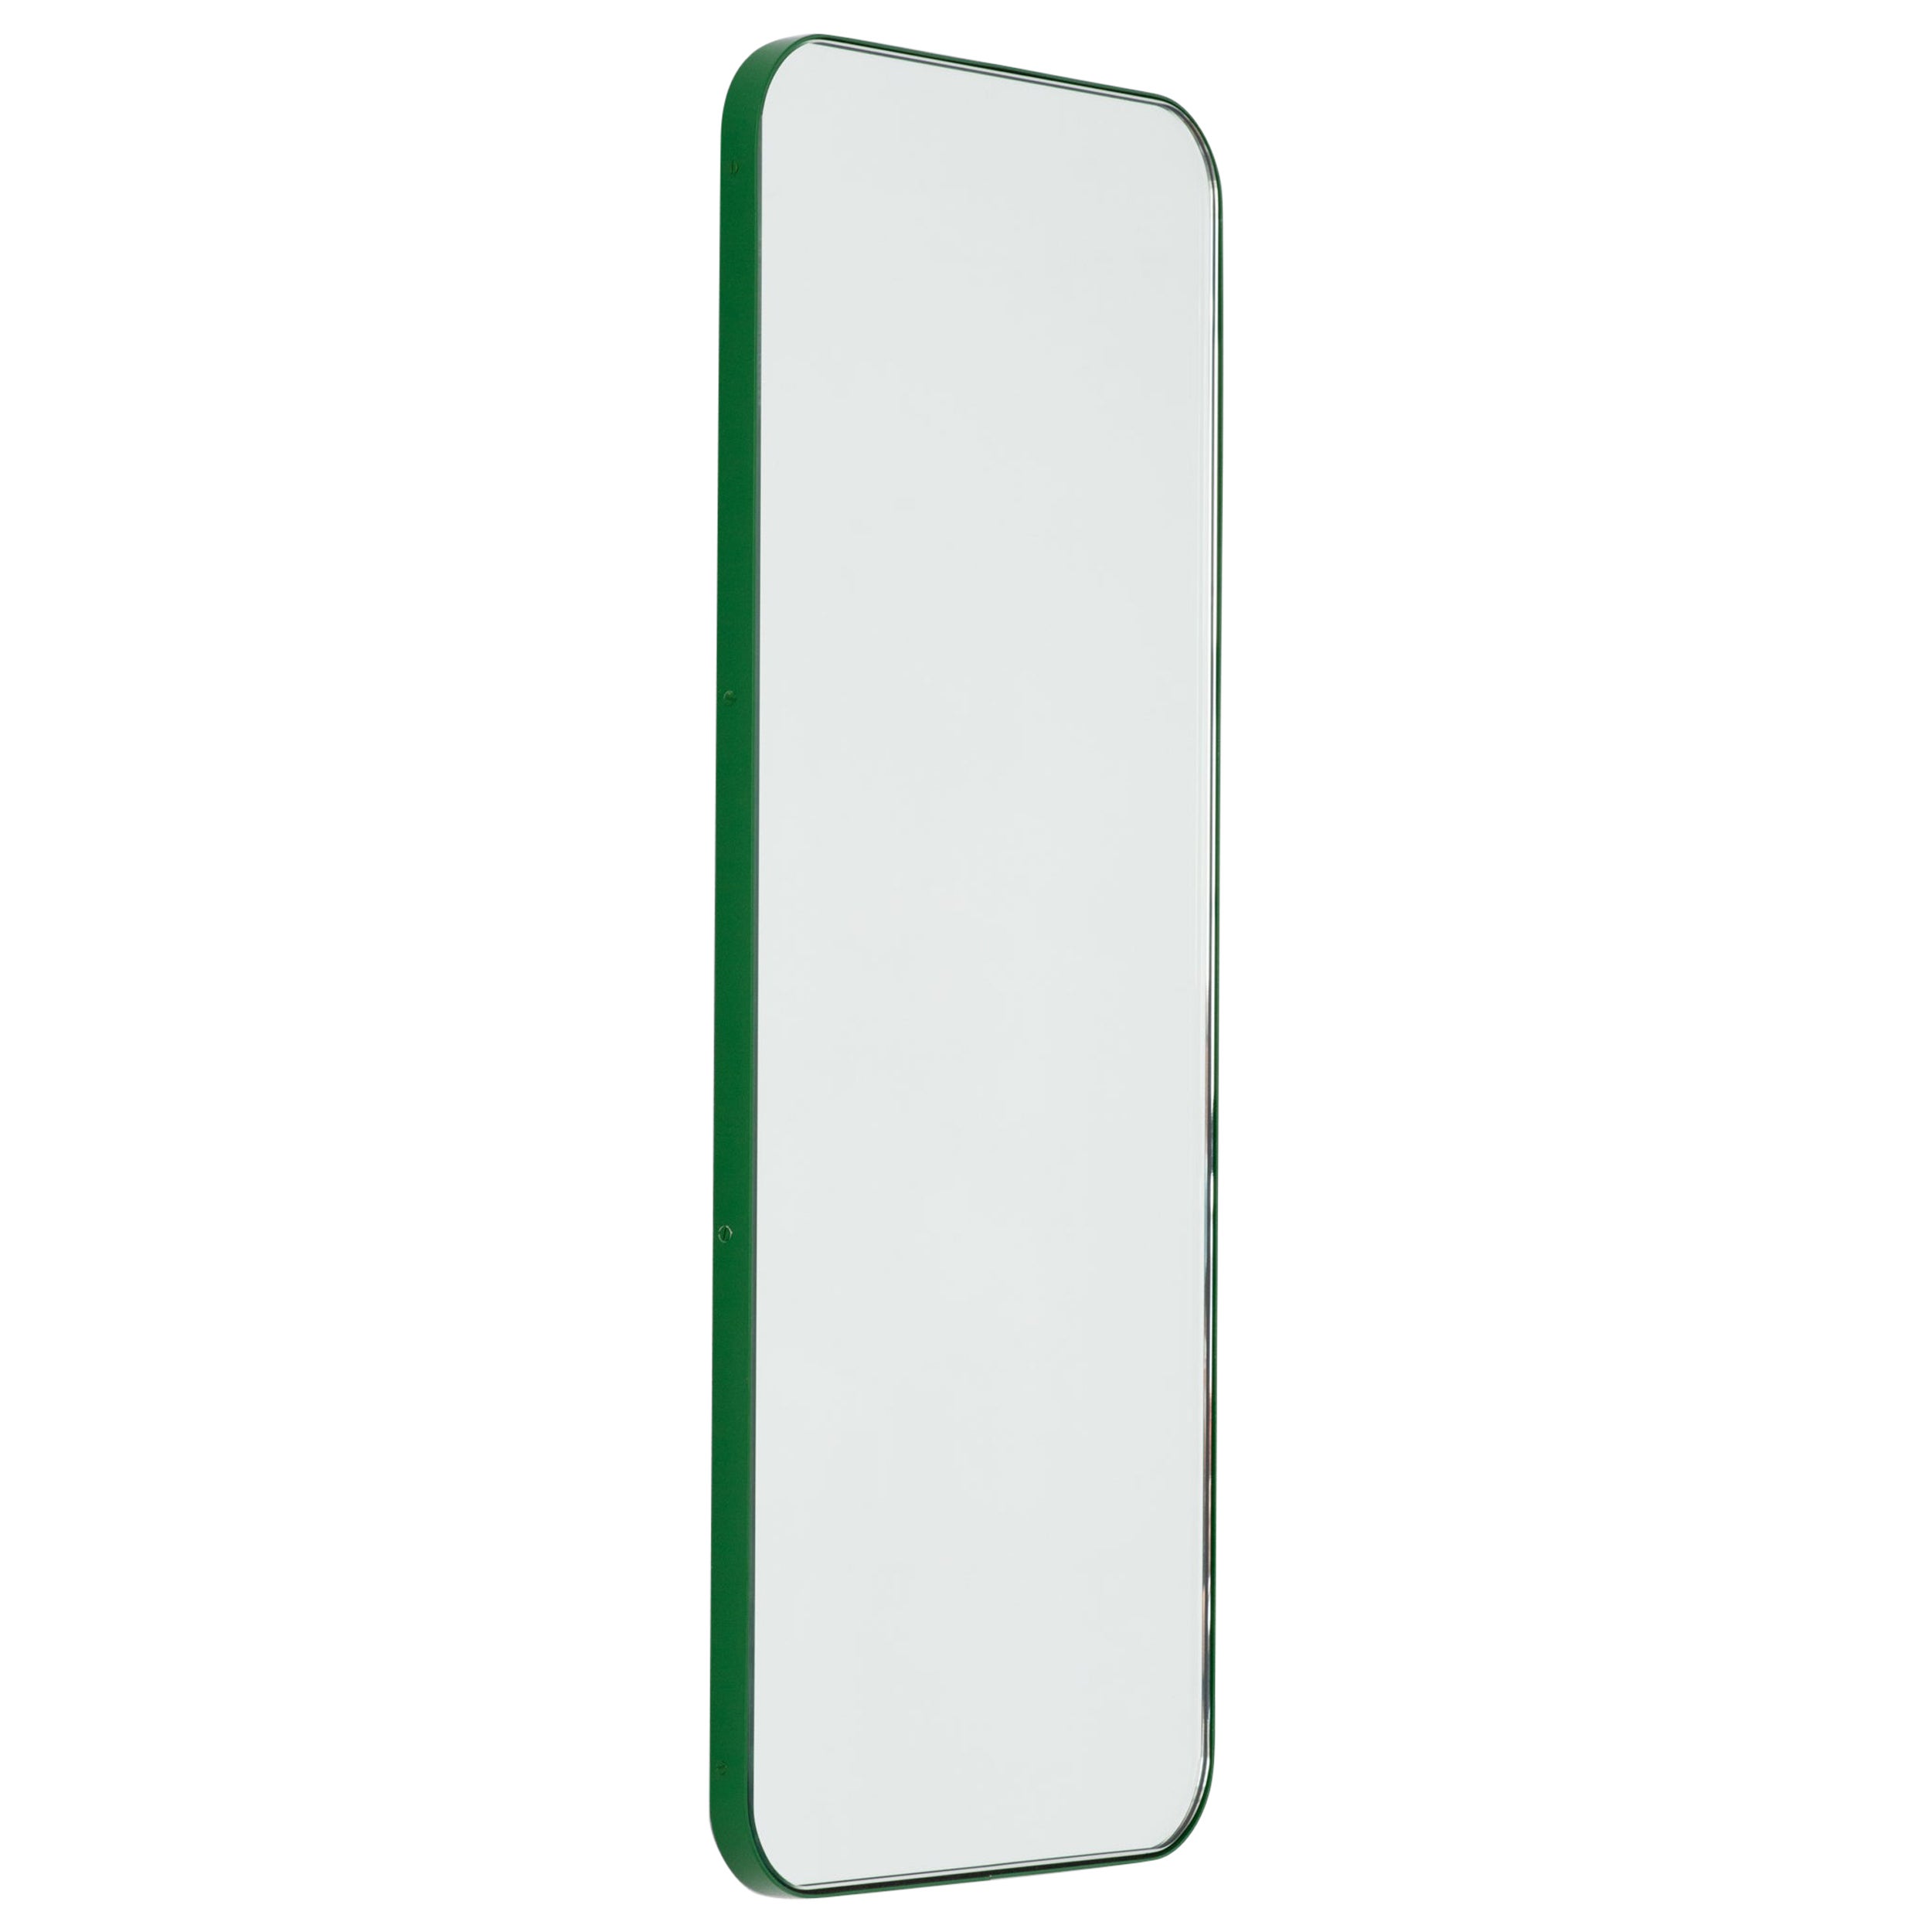 Quadris Rectangular Minimalist Mirror with a Modern Green Frame, Medium